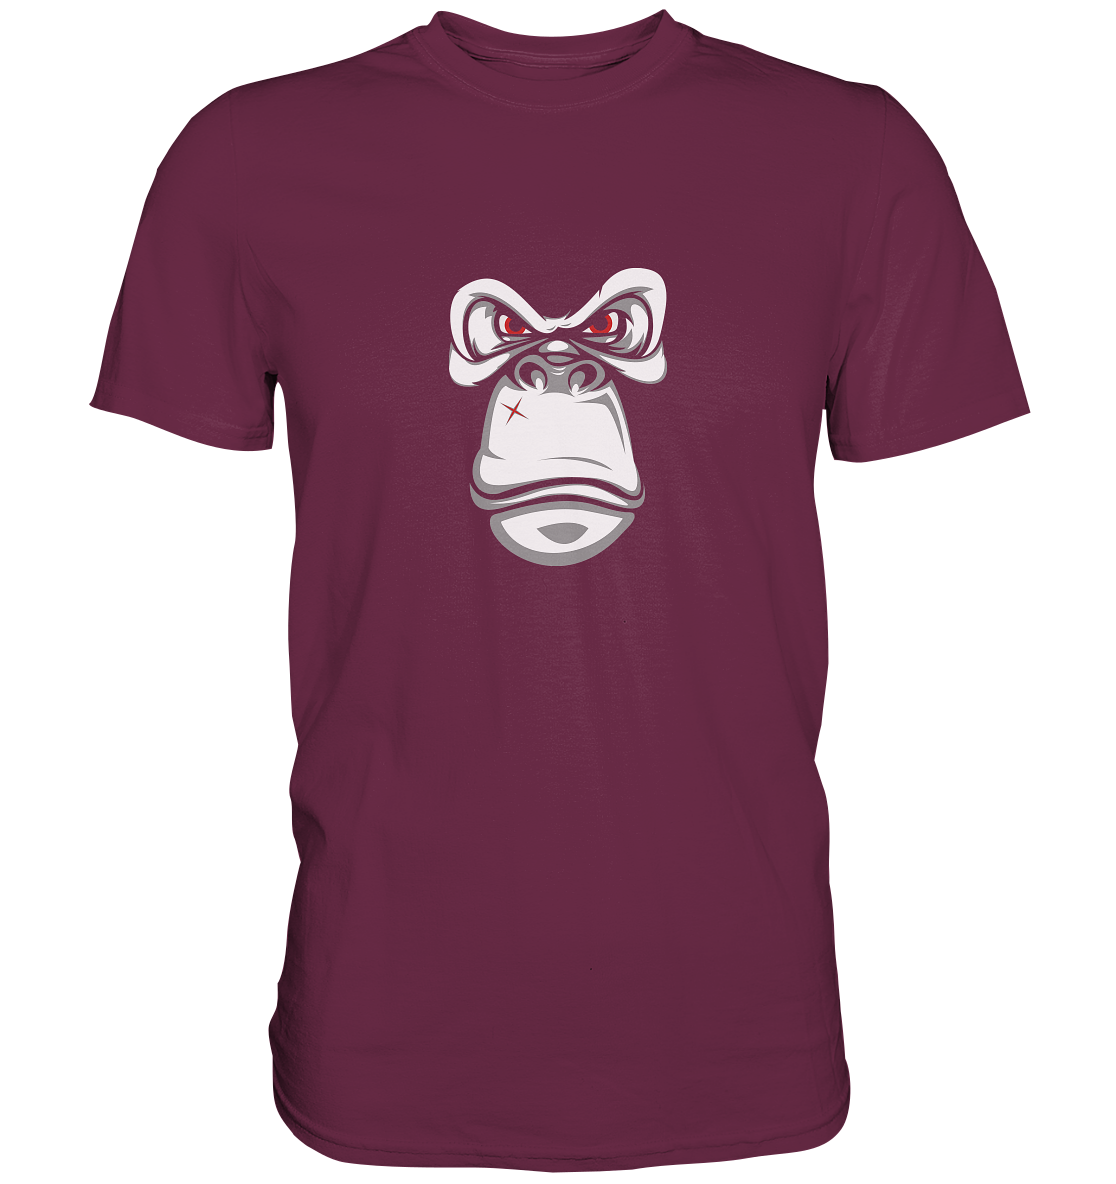 Motiv: Angry  Gorilla - Unisex Premium Shirt - mehrere Farben